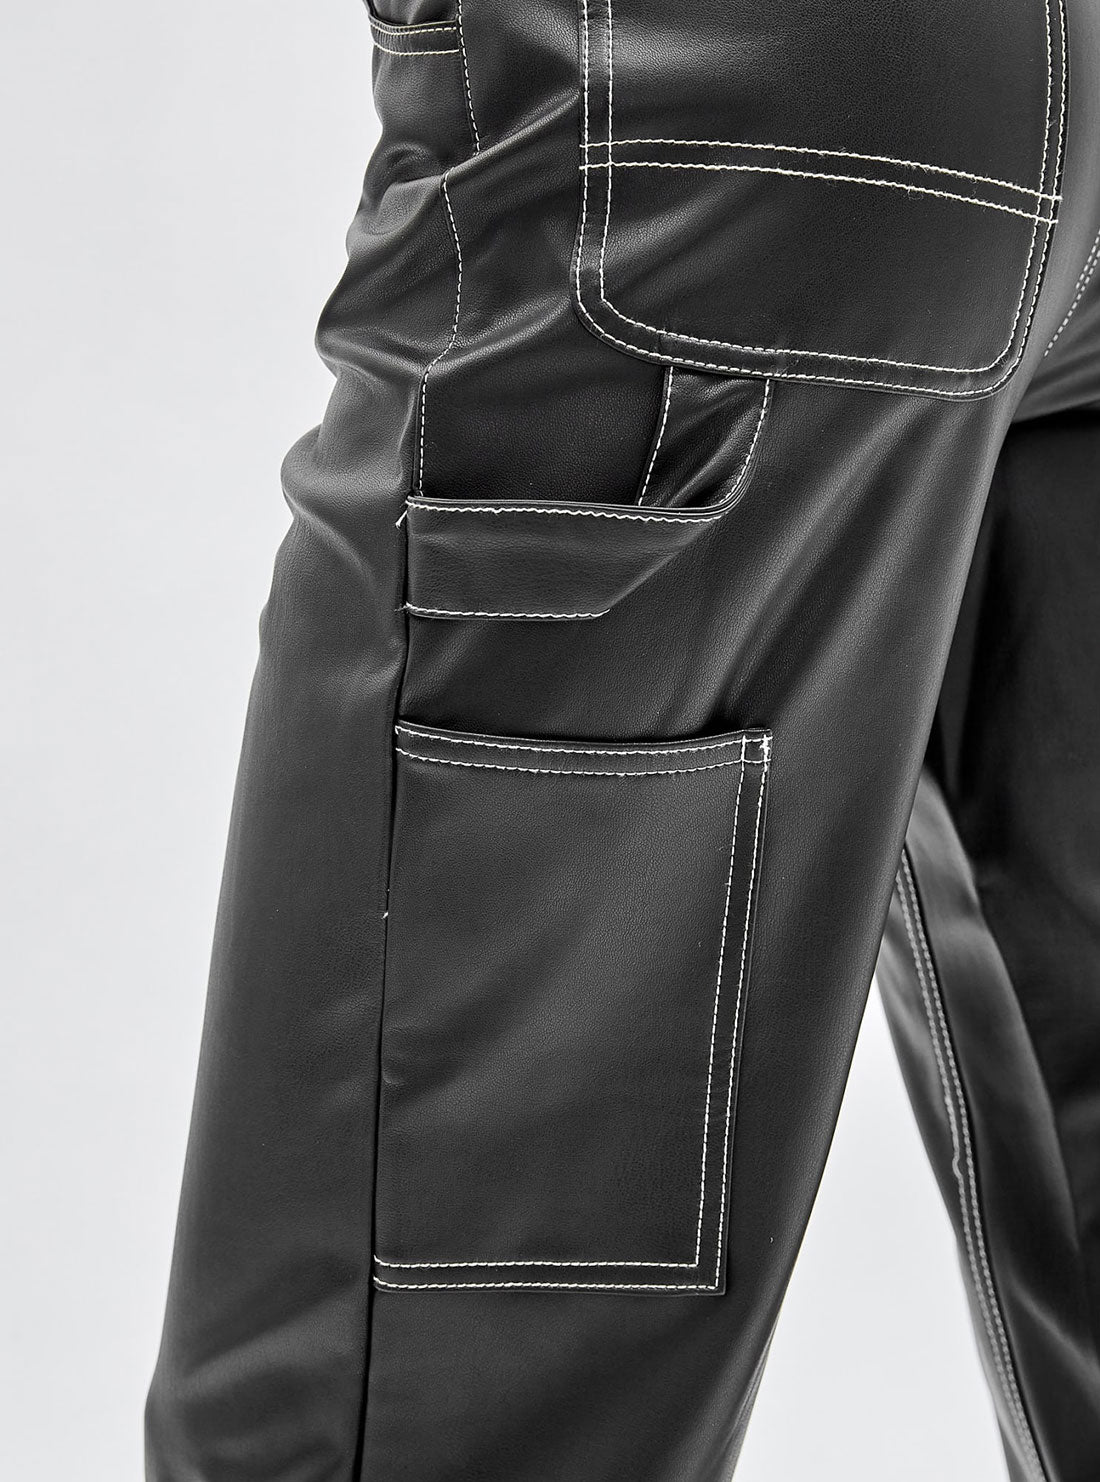 Black Leather Pants – Untitled 1991